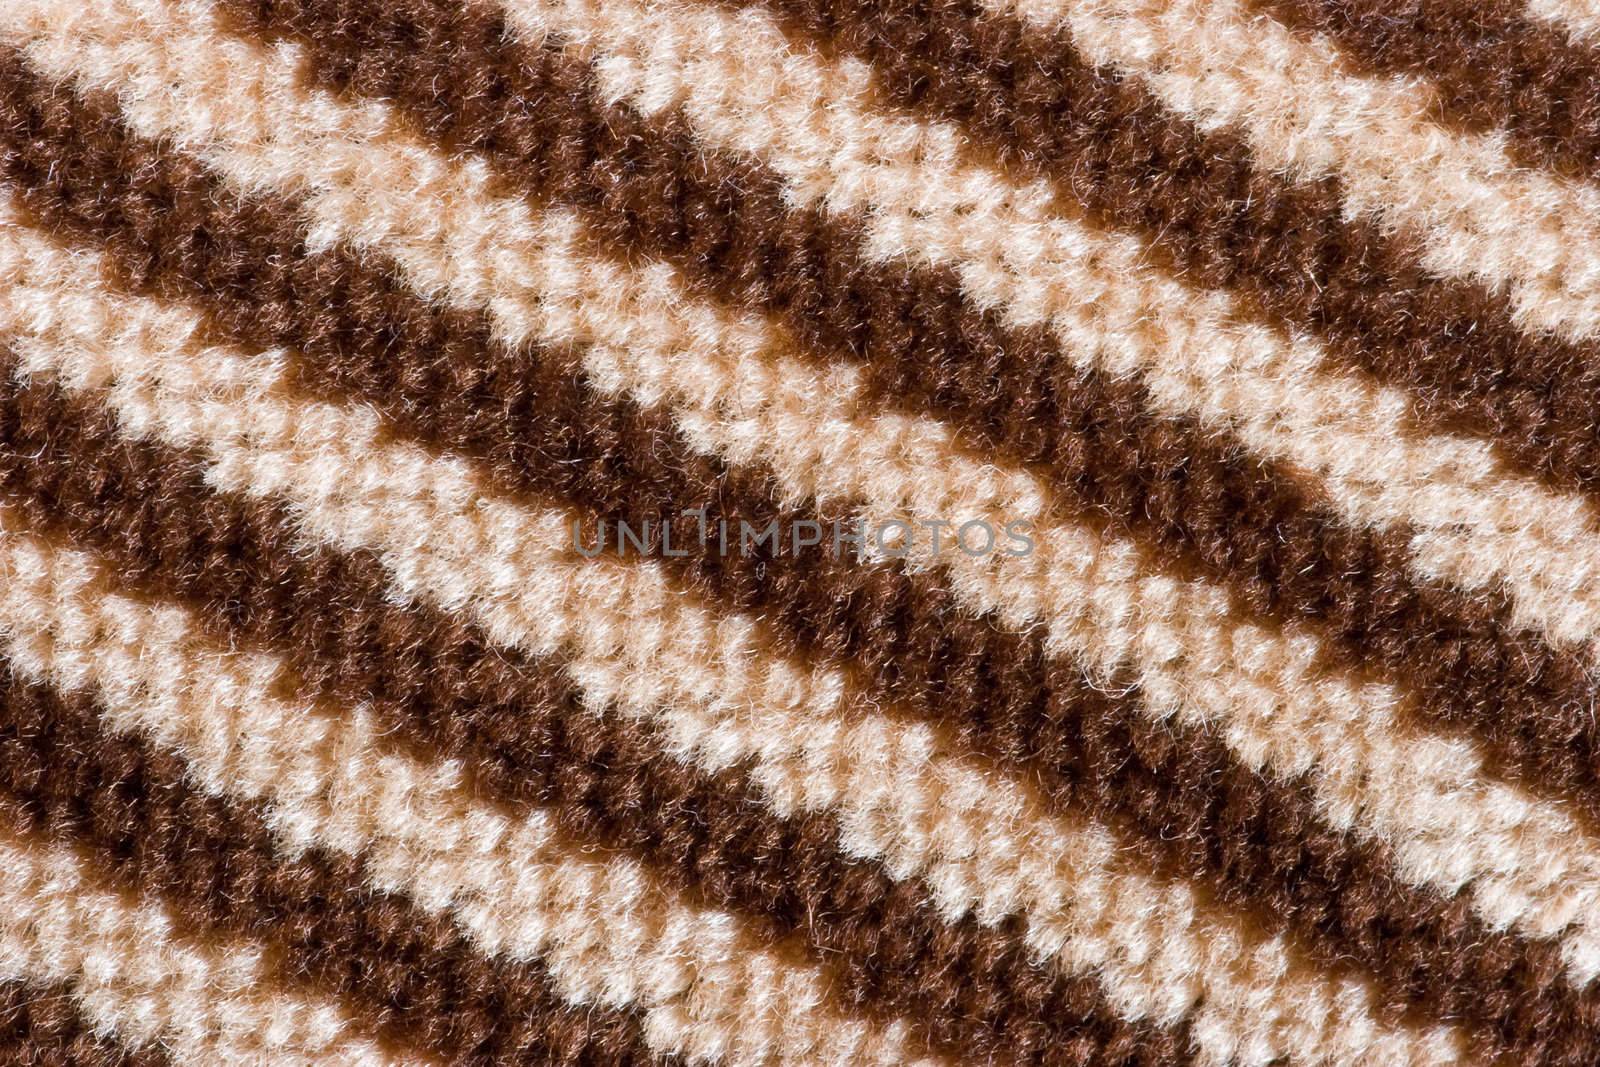 Striped fabric pattern by naumoid